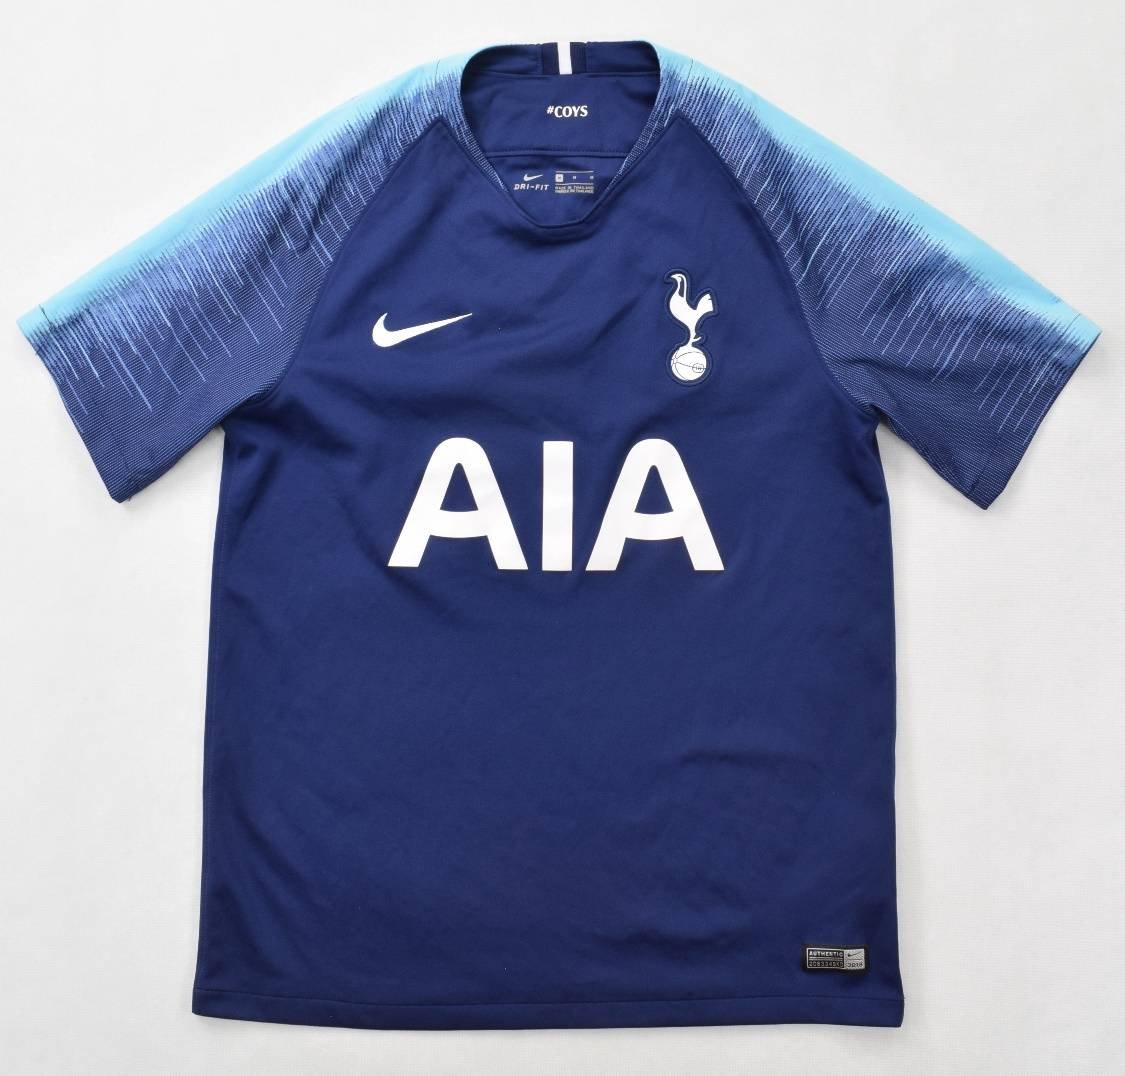 Tottenham Hotspur Away football shirt 2018 - 2019. Sponsored by AIA